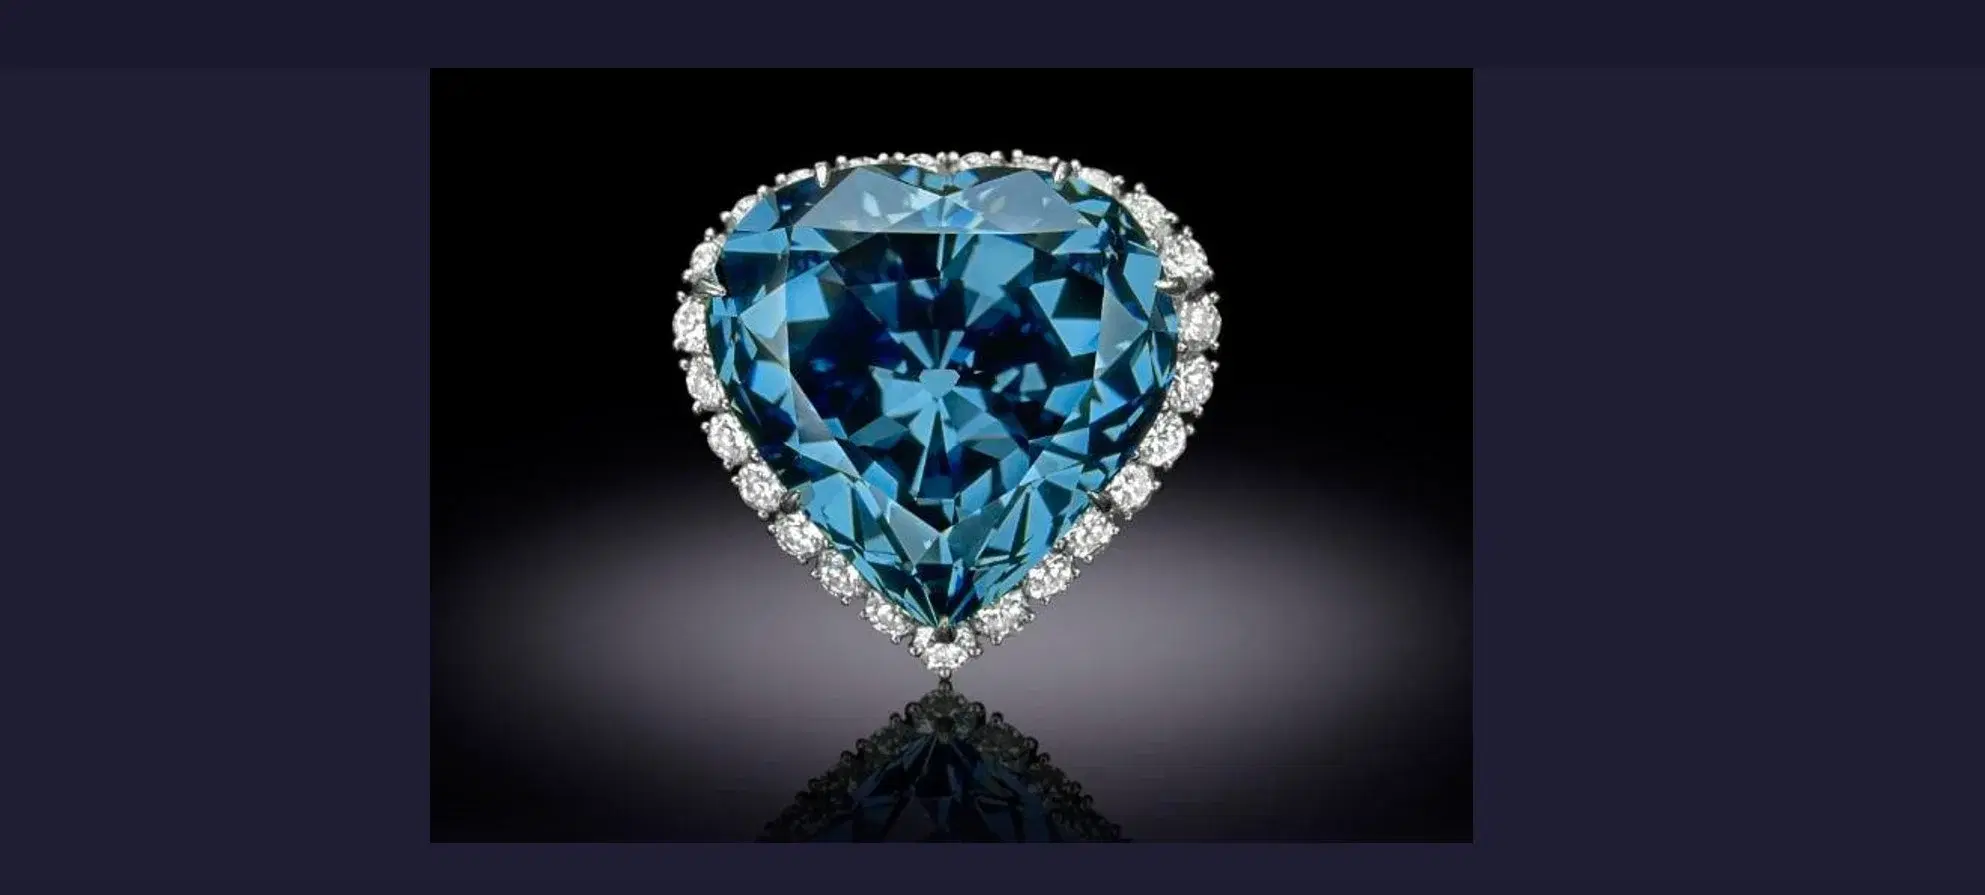 The Blue Heart Diamond: A Jewel to Admire